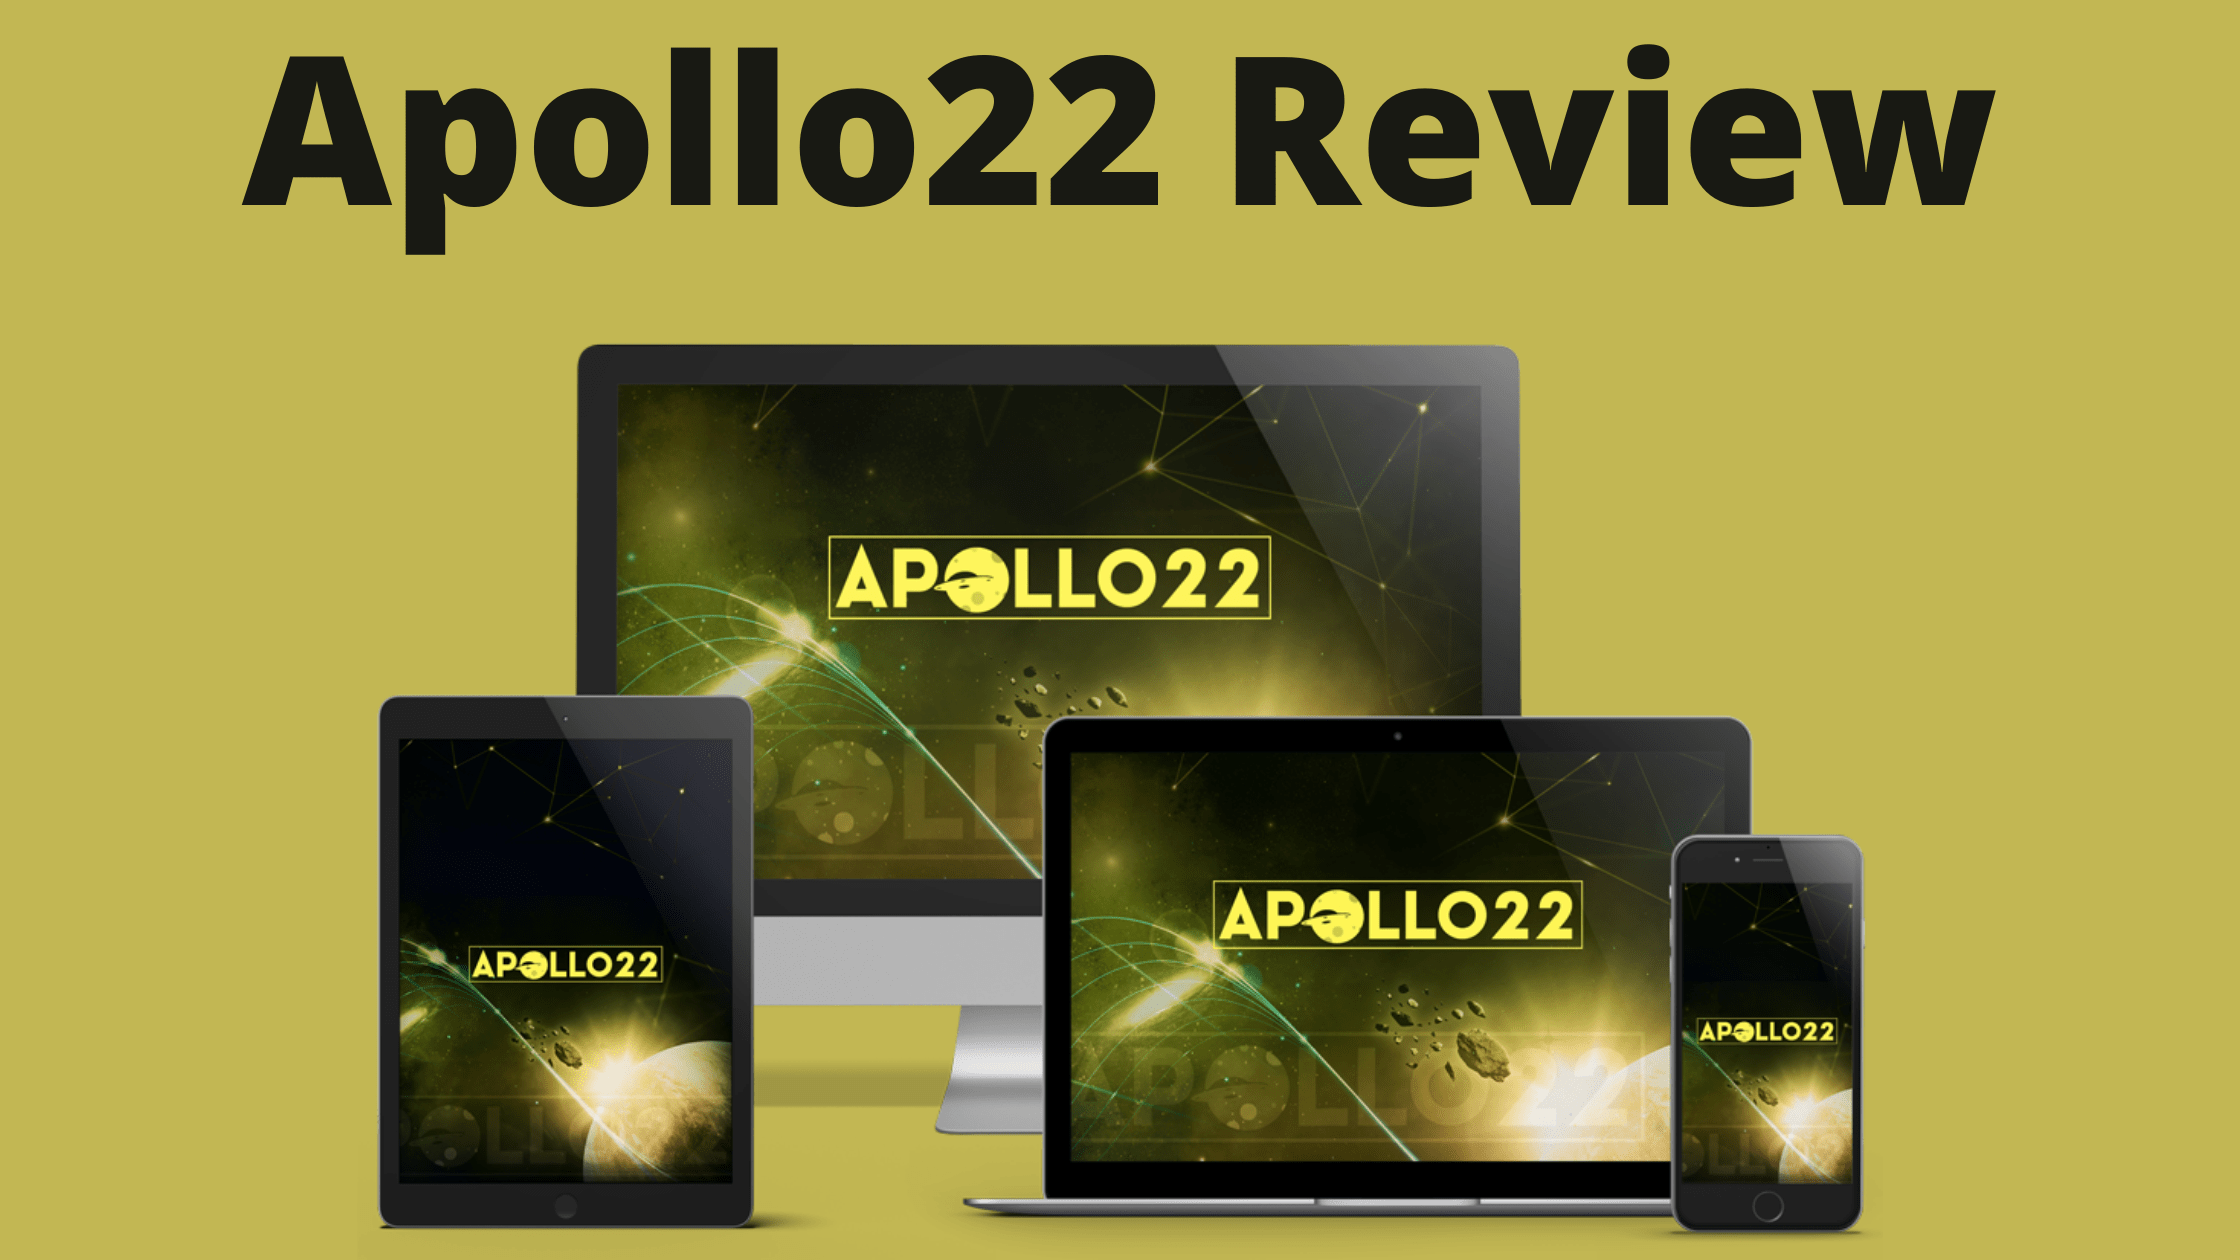 Apollo22 Review